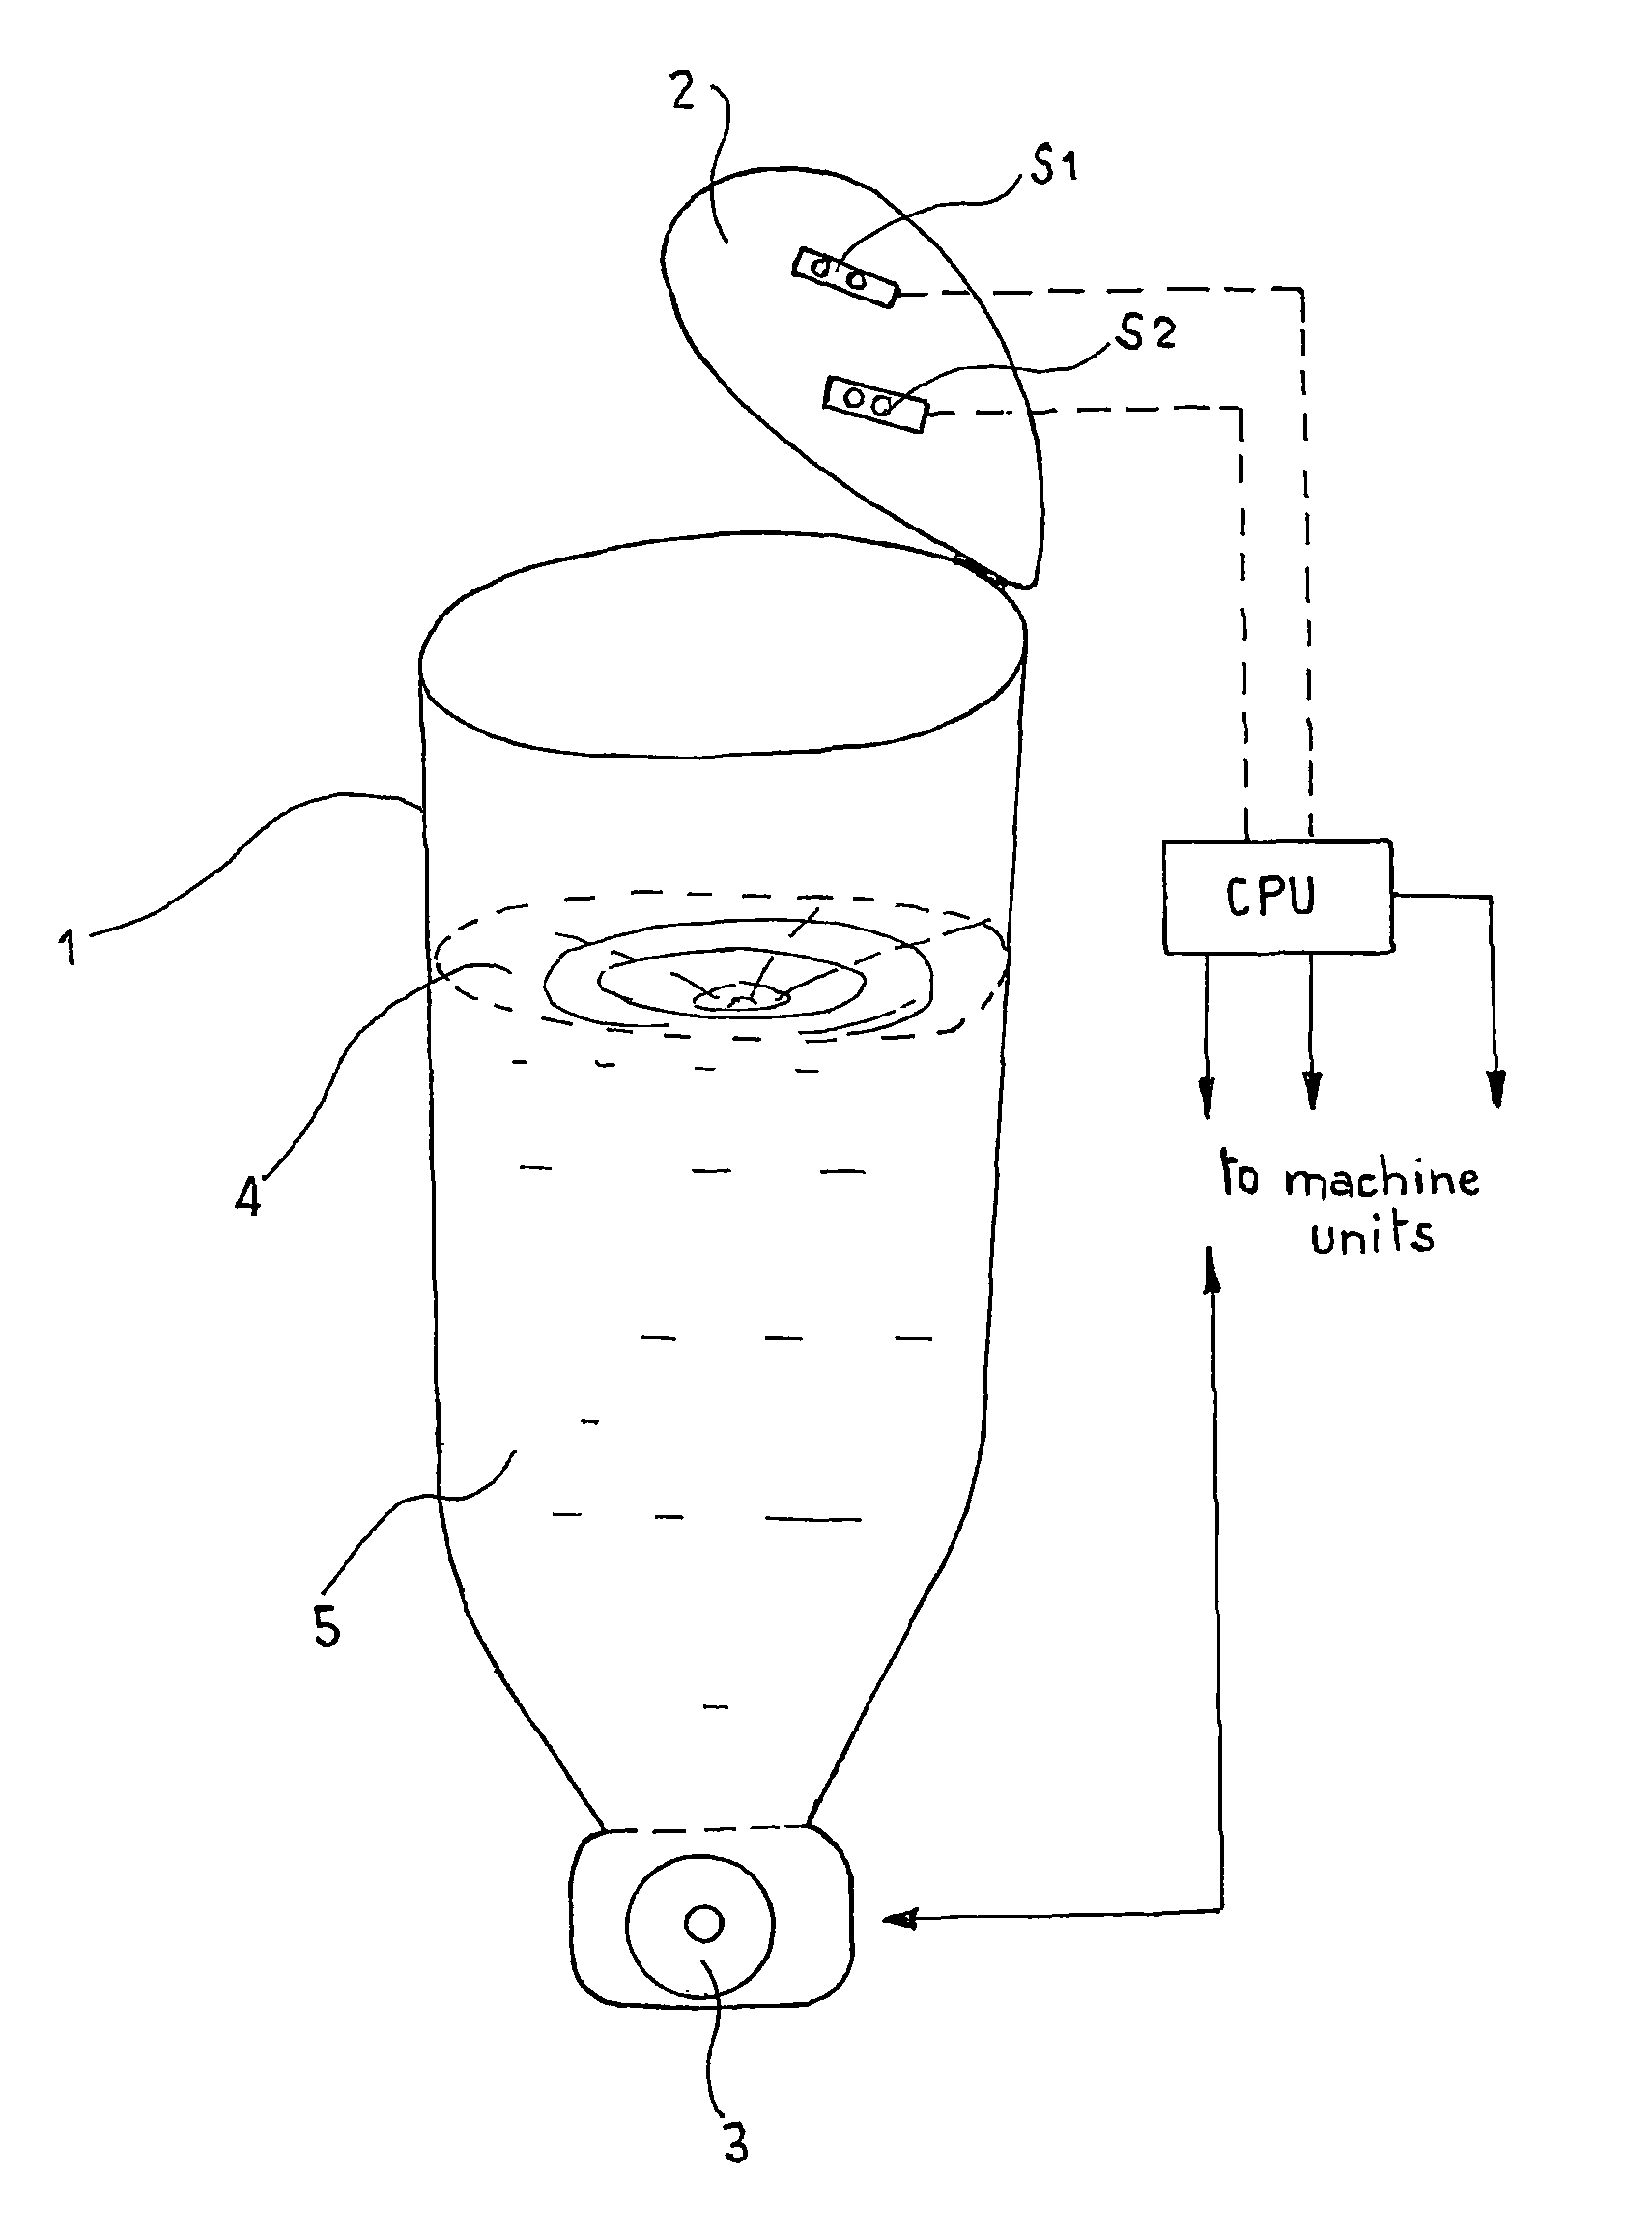 Apparatus and method of controlling beverage dispensing machines